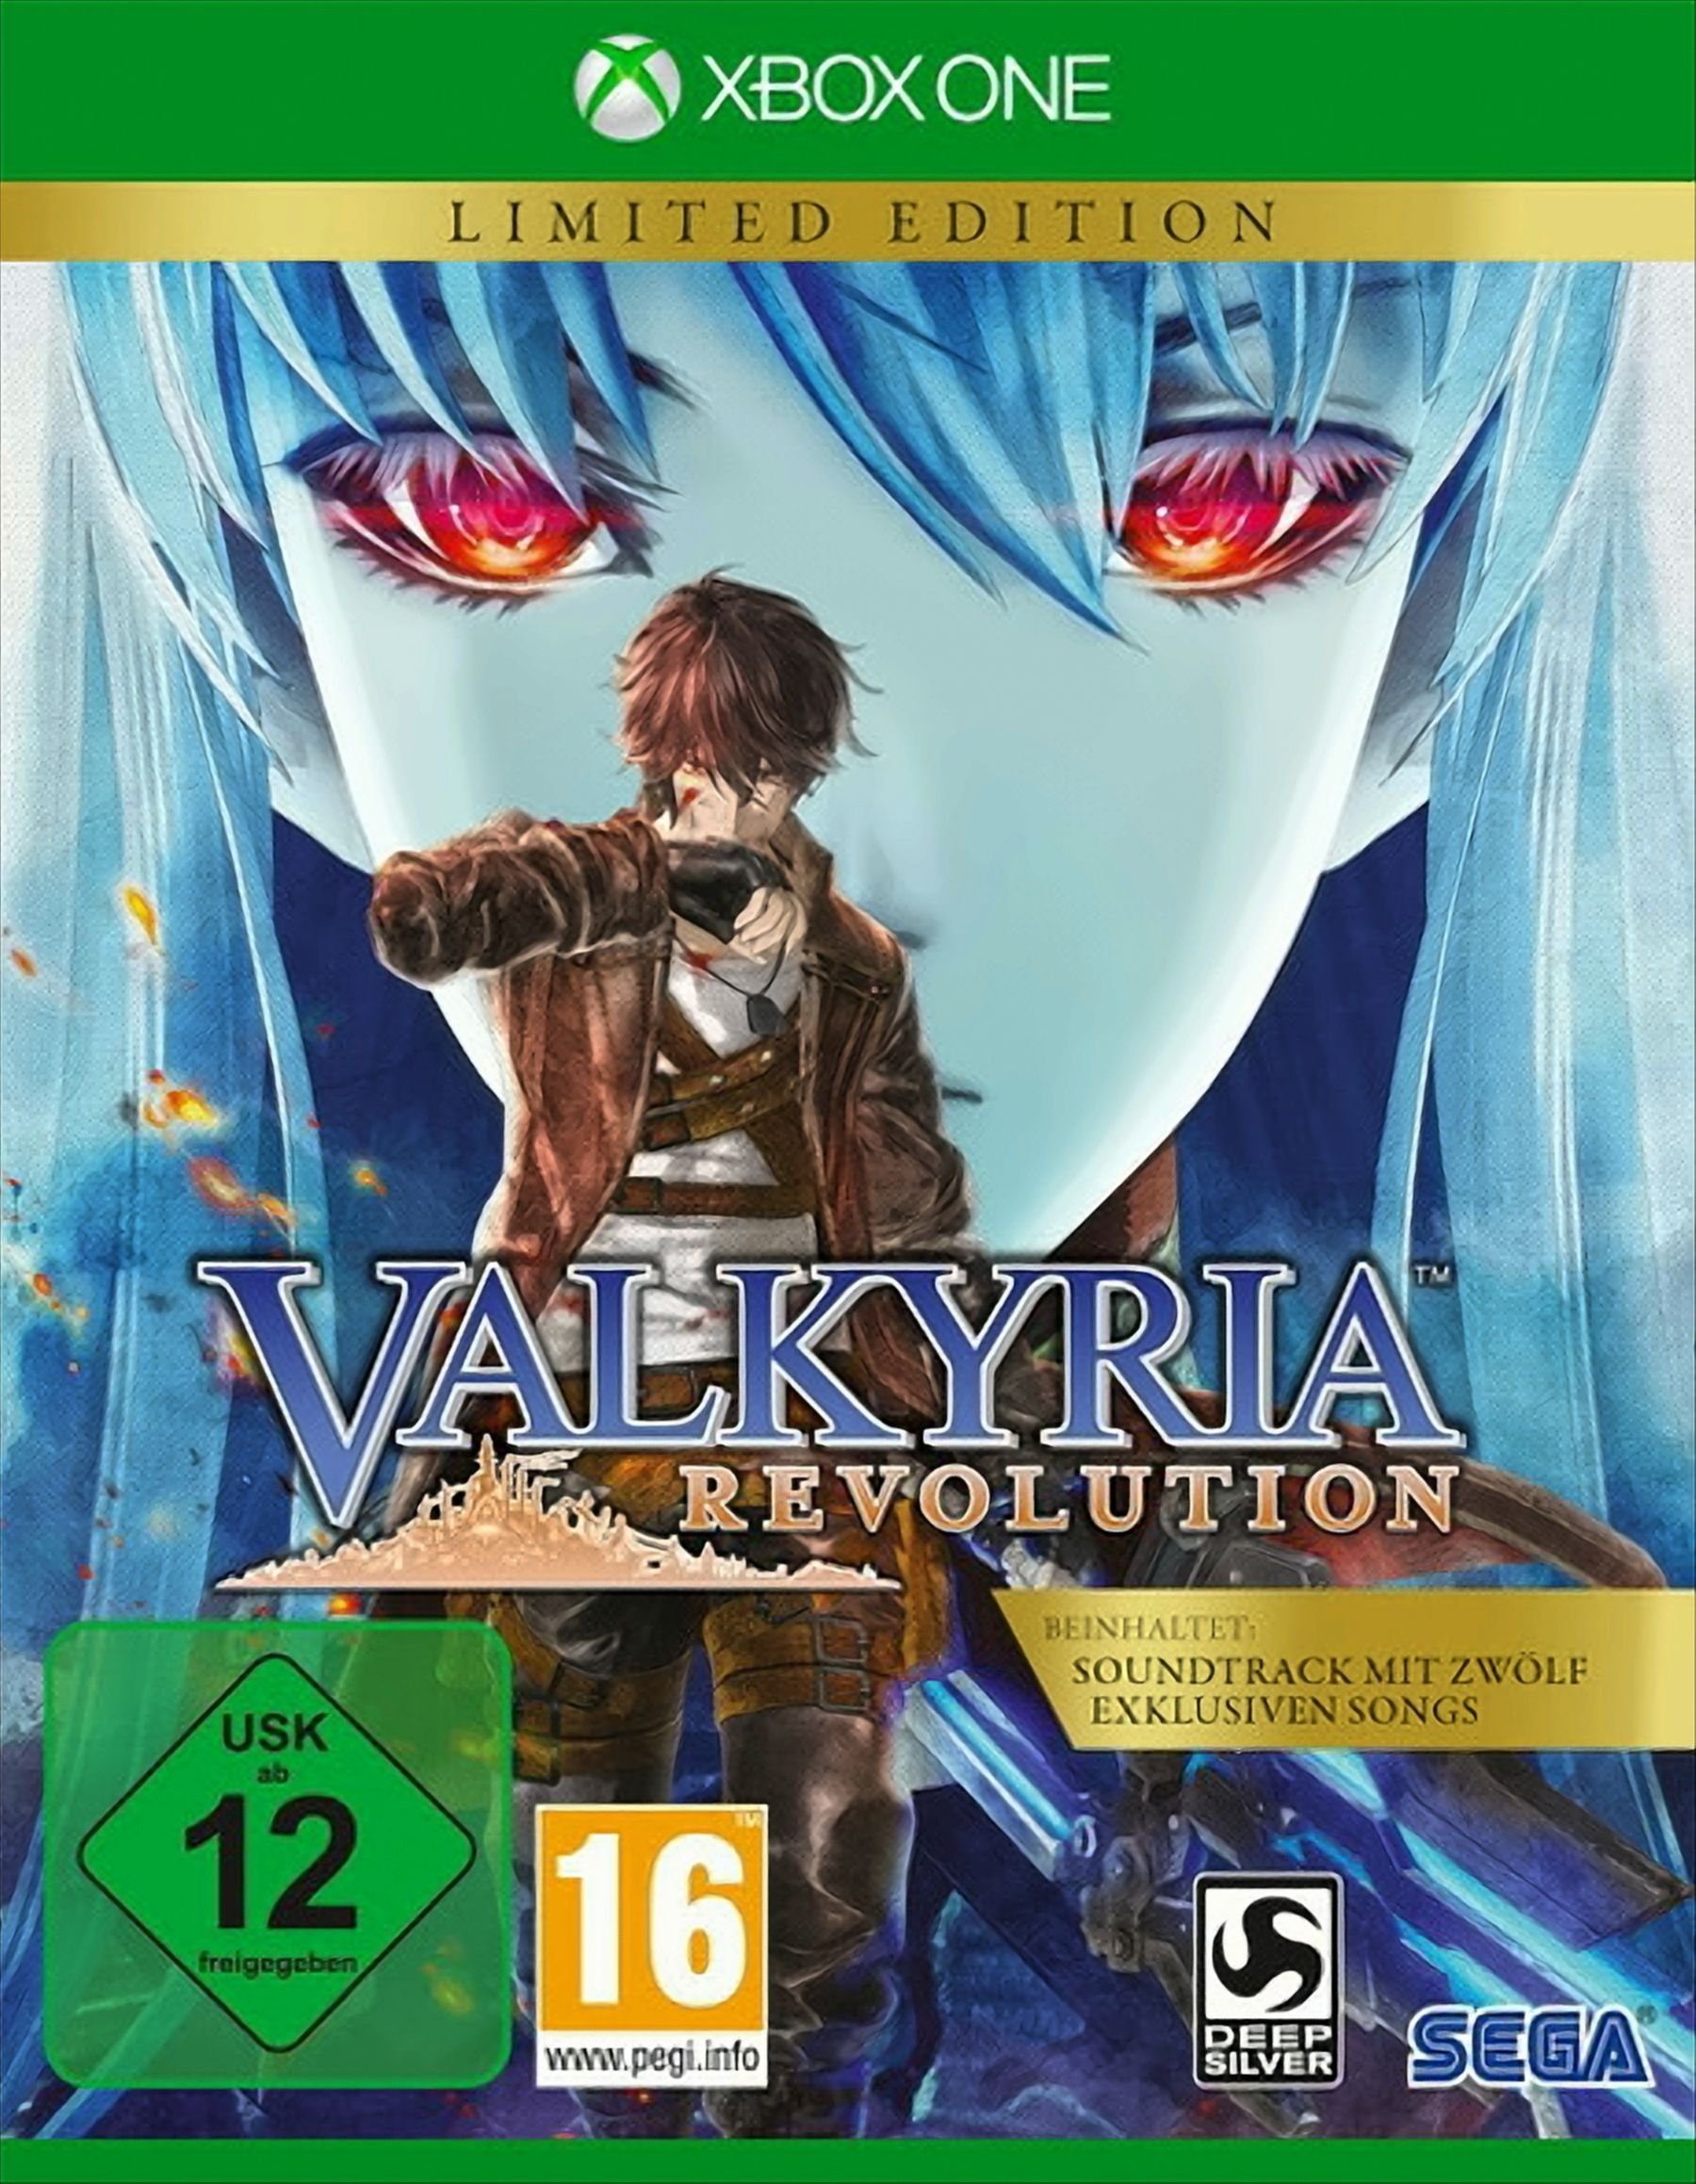 Valkyria Revolution - Limited Edition Xbox One